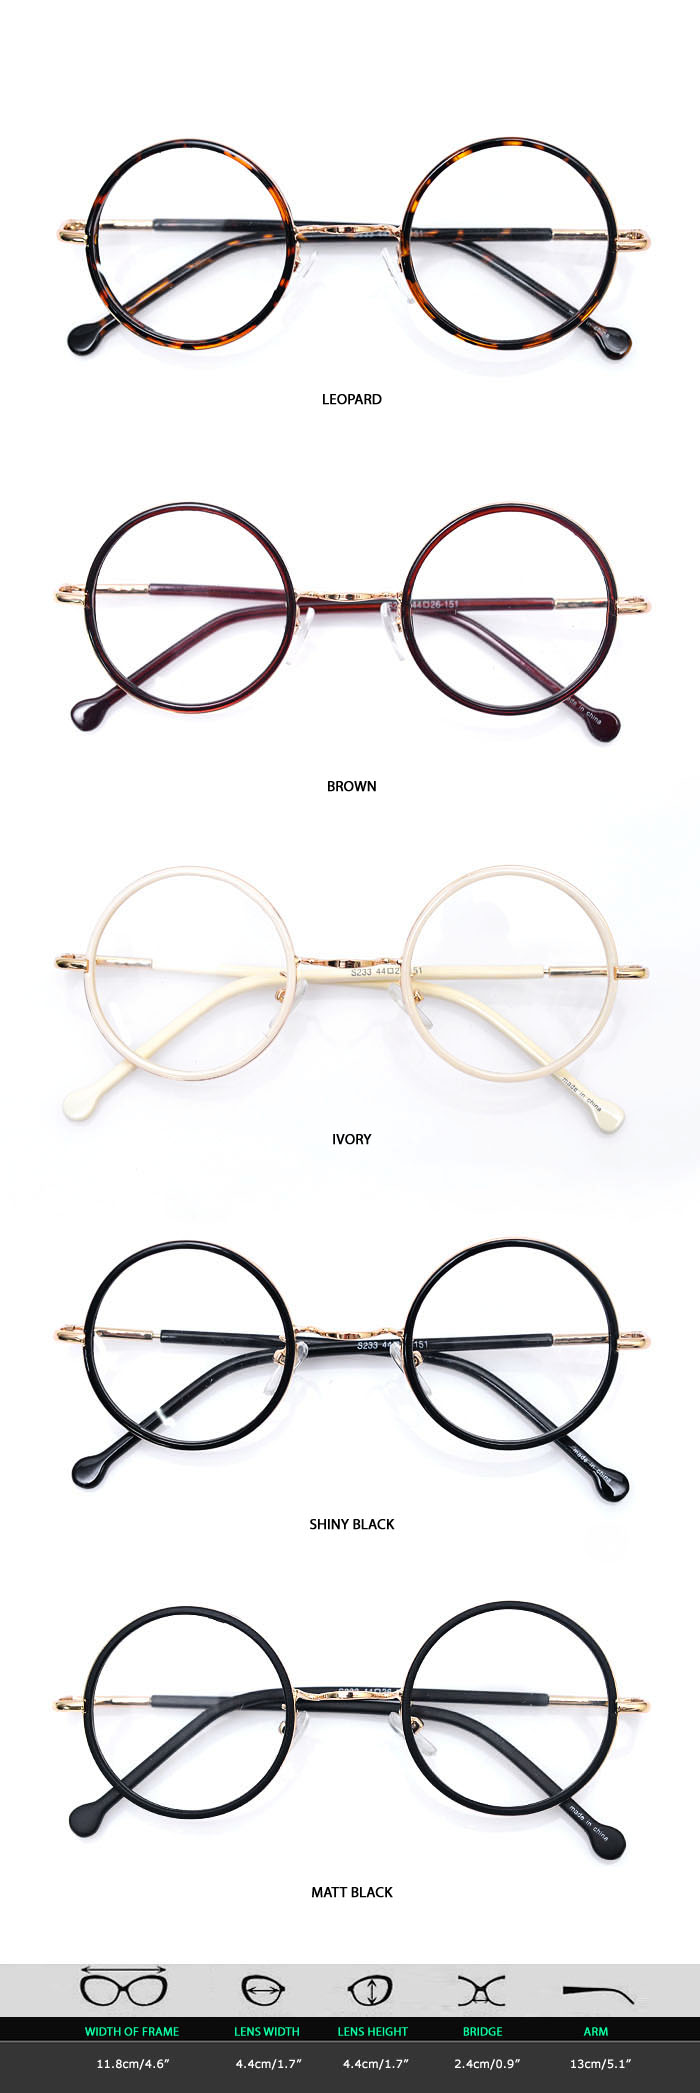 Accessories :: Sunglasses & Glasses :: Euro Chic Gold Contrast Round ...